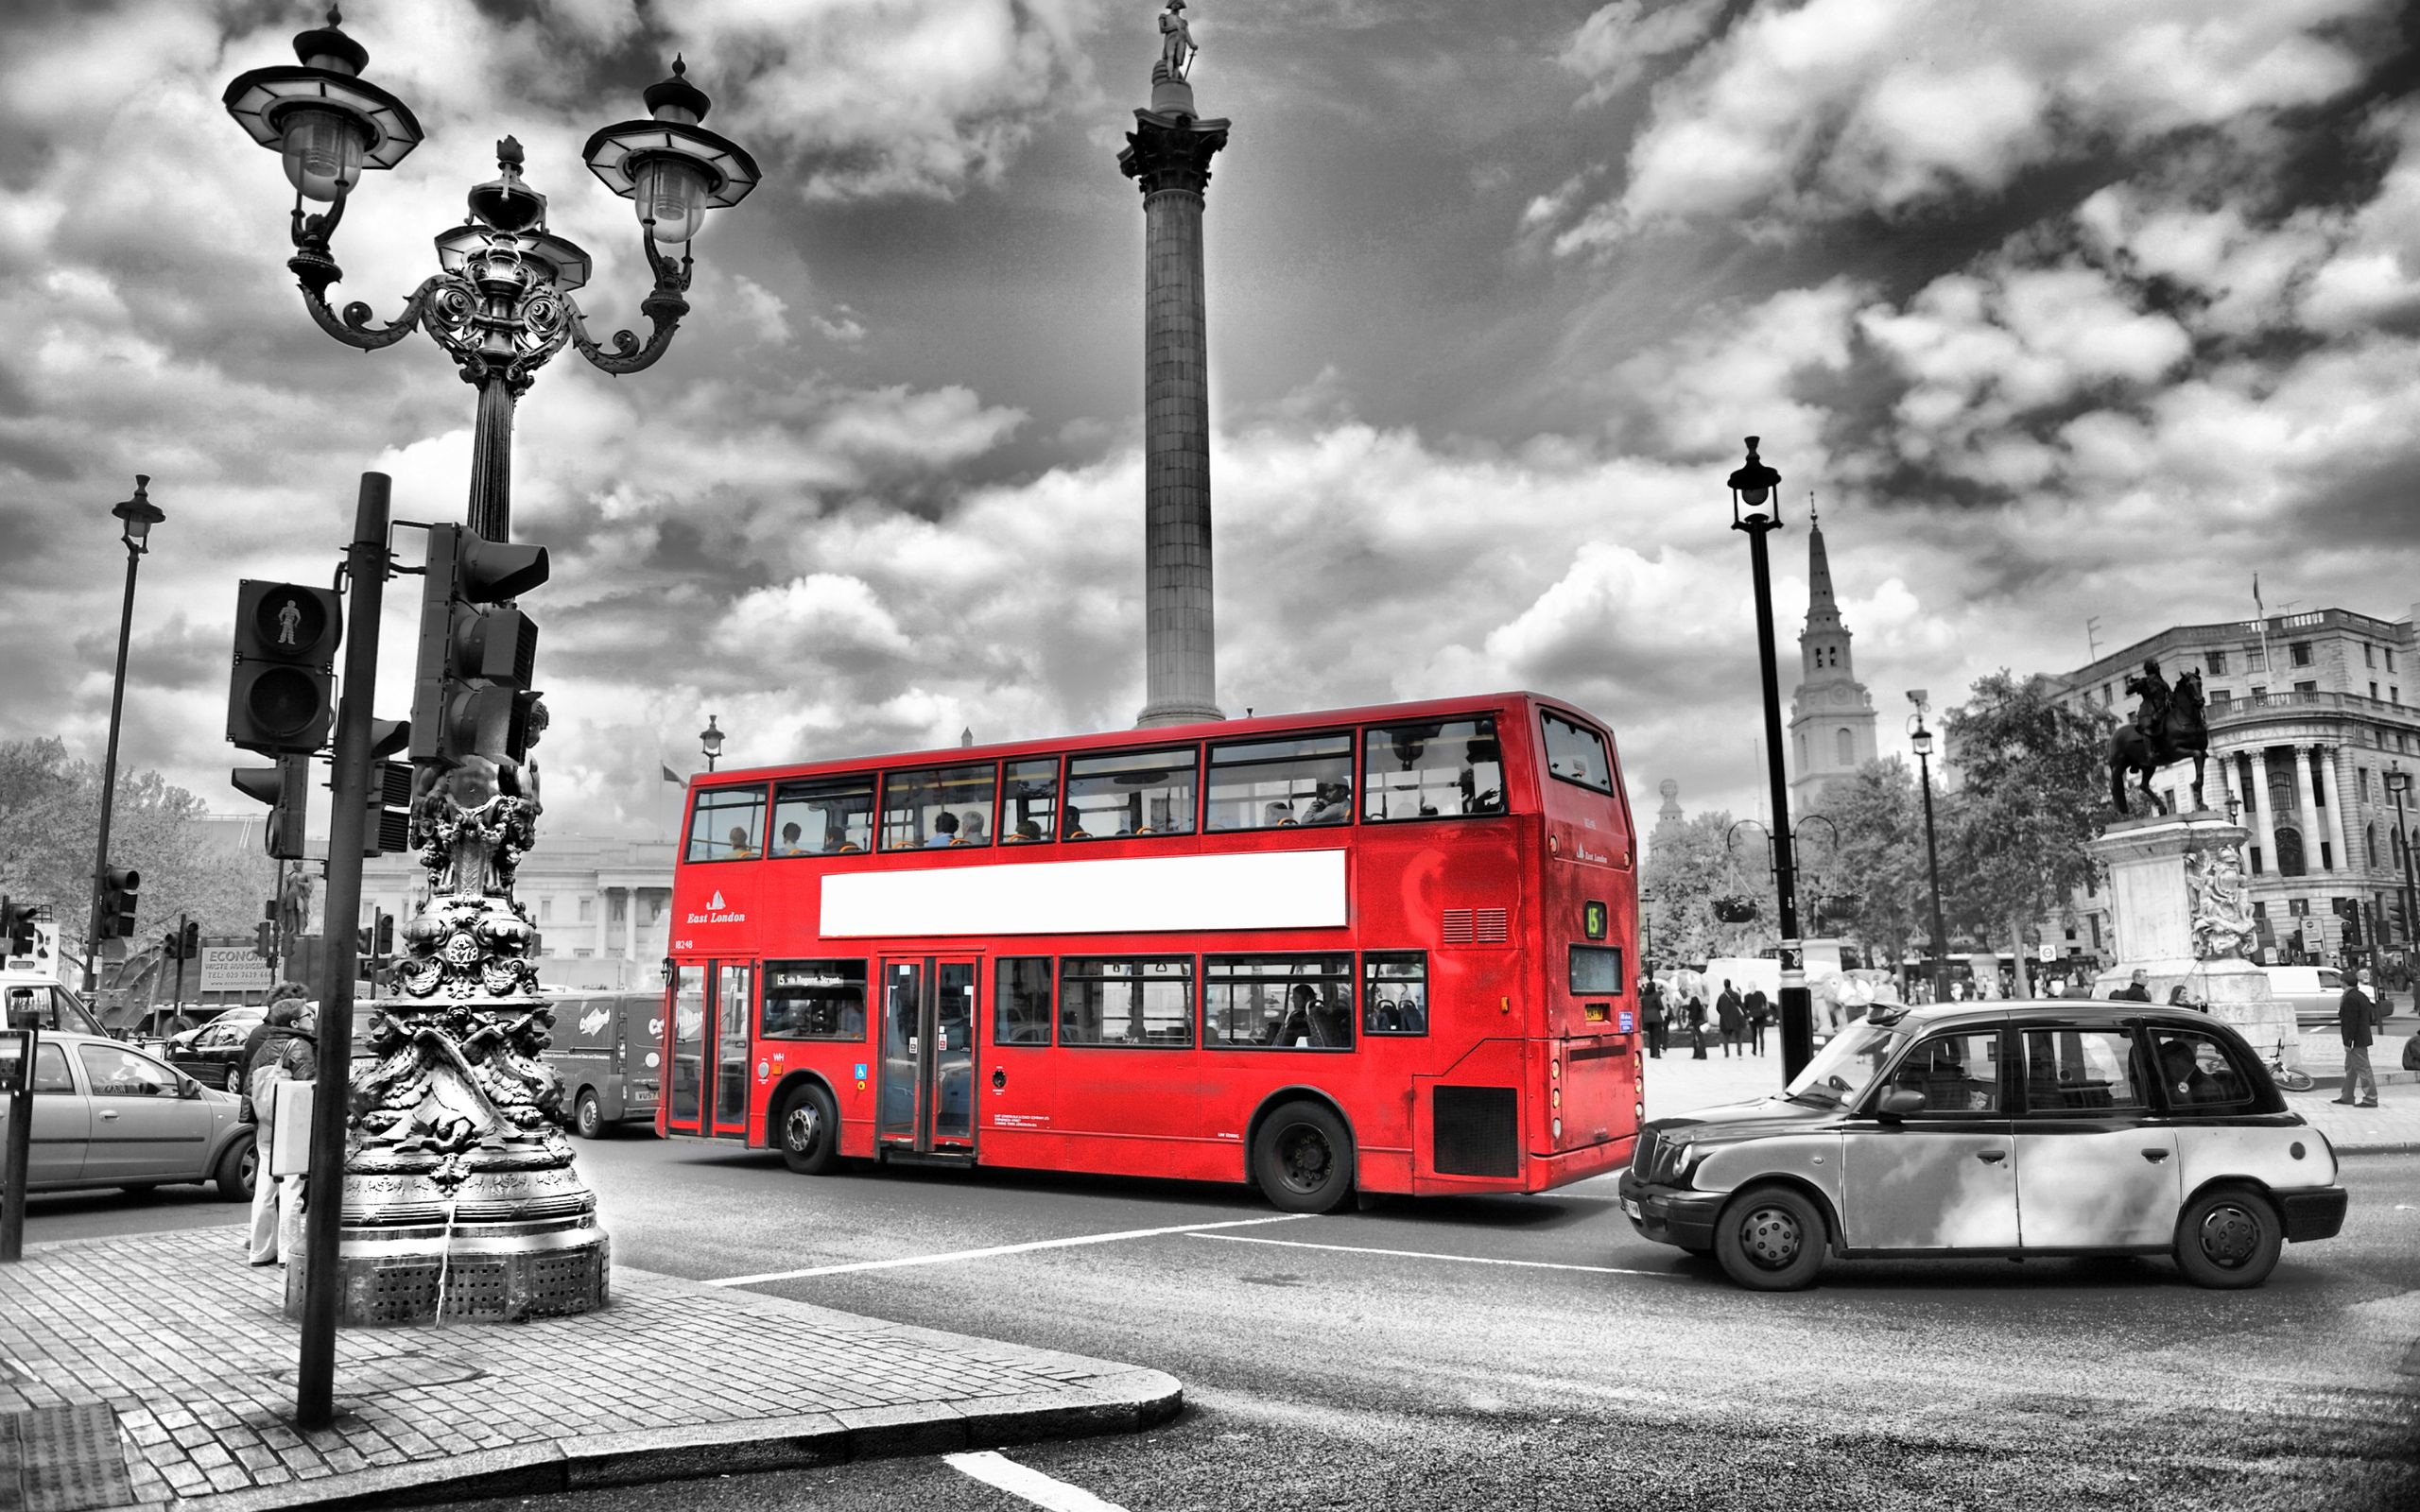 Wallpaper, 2560x1600 px, and, black, blur, bus, city, England, lights, London, night, road, street, white 2560x1600